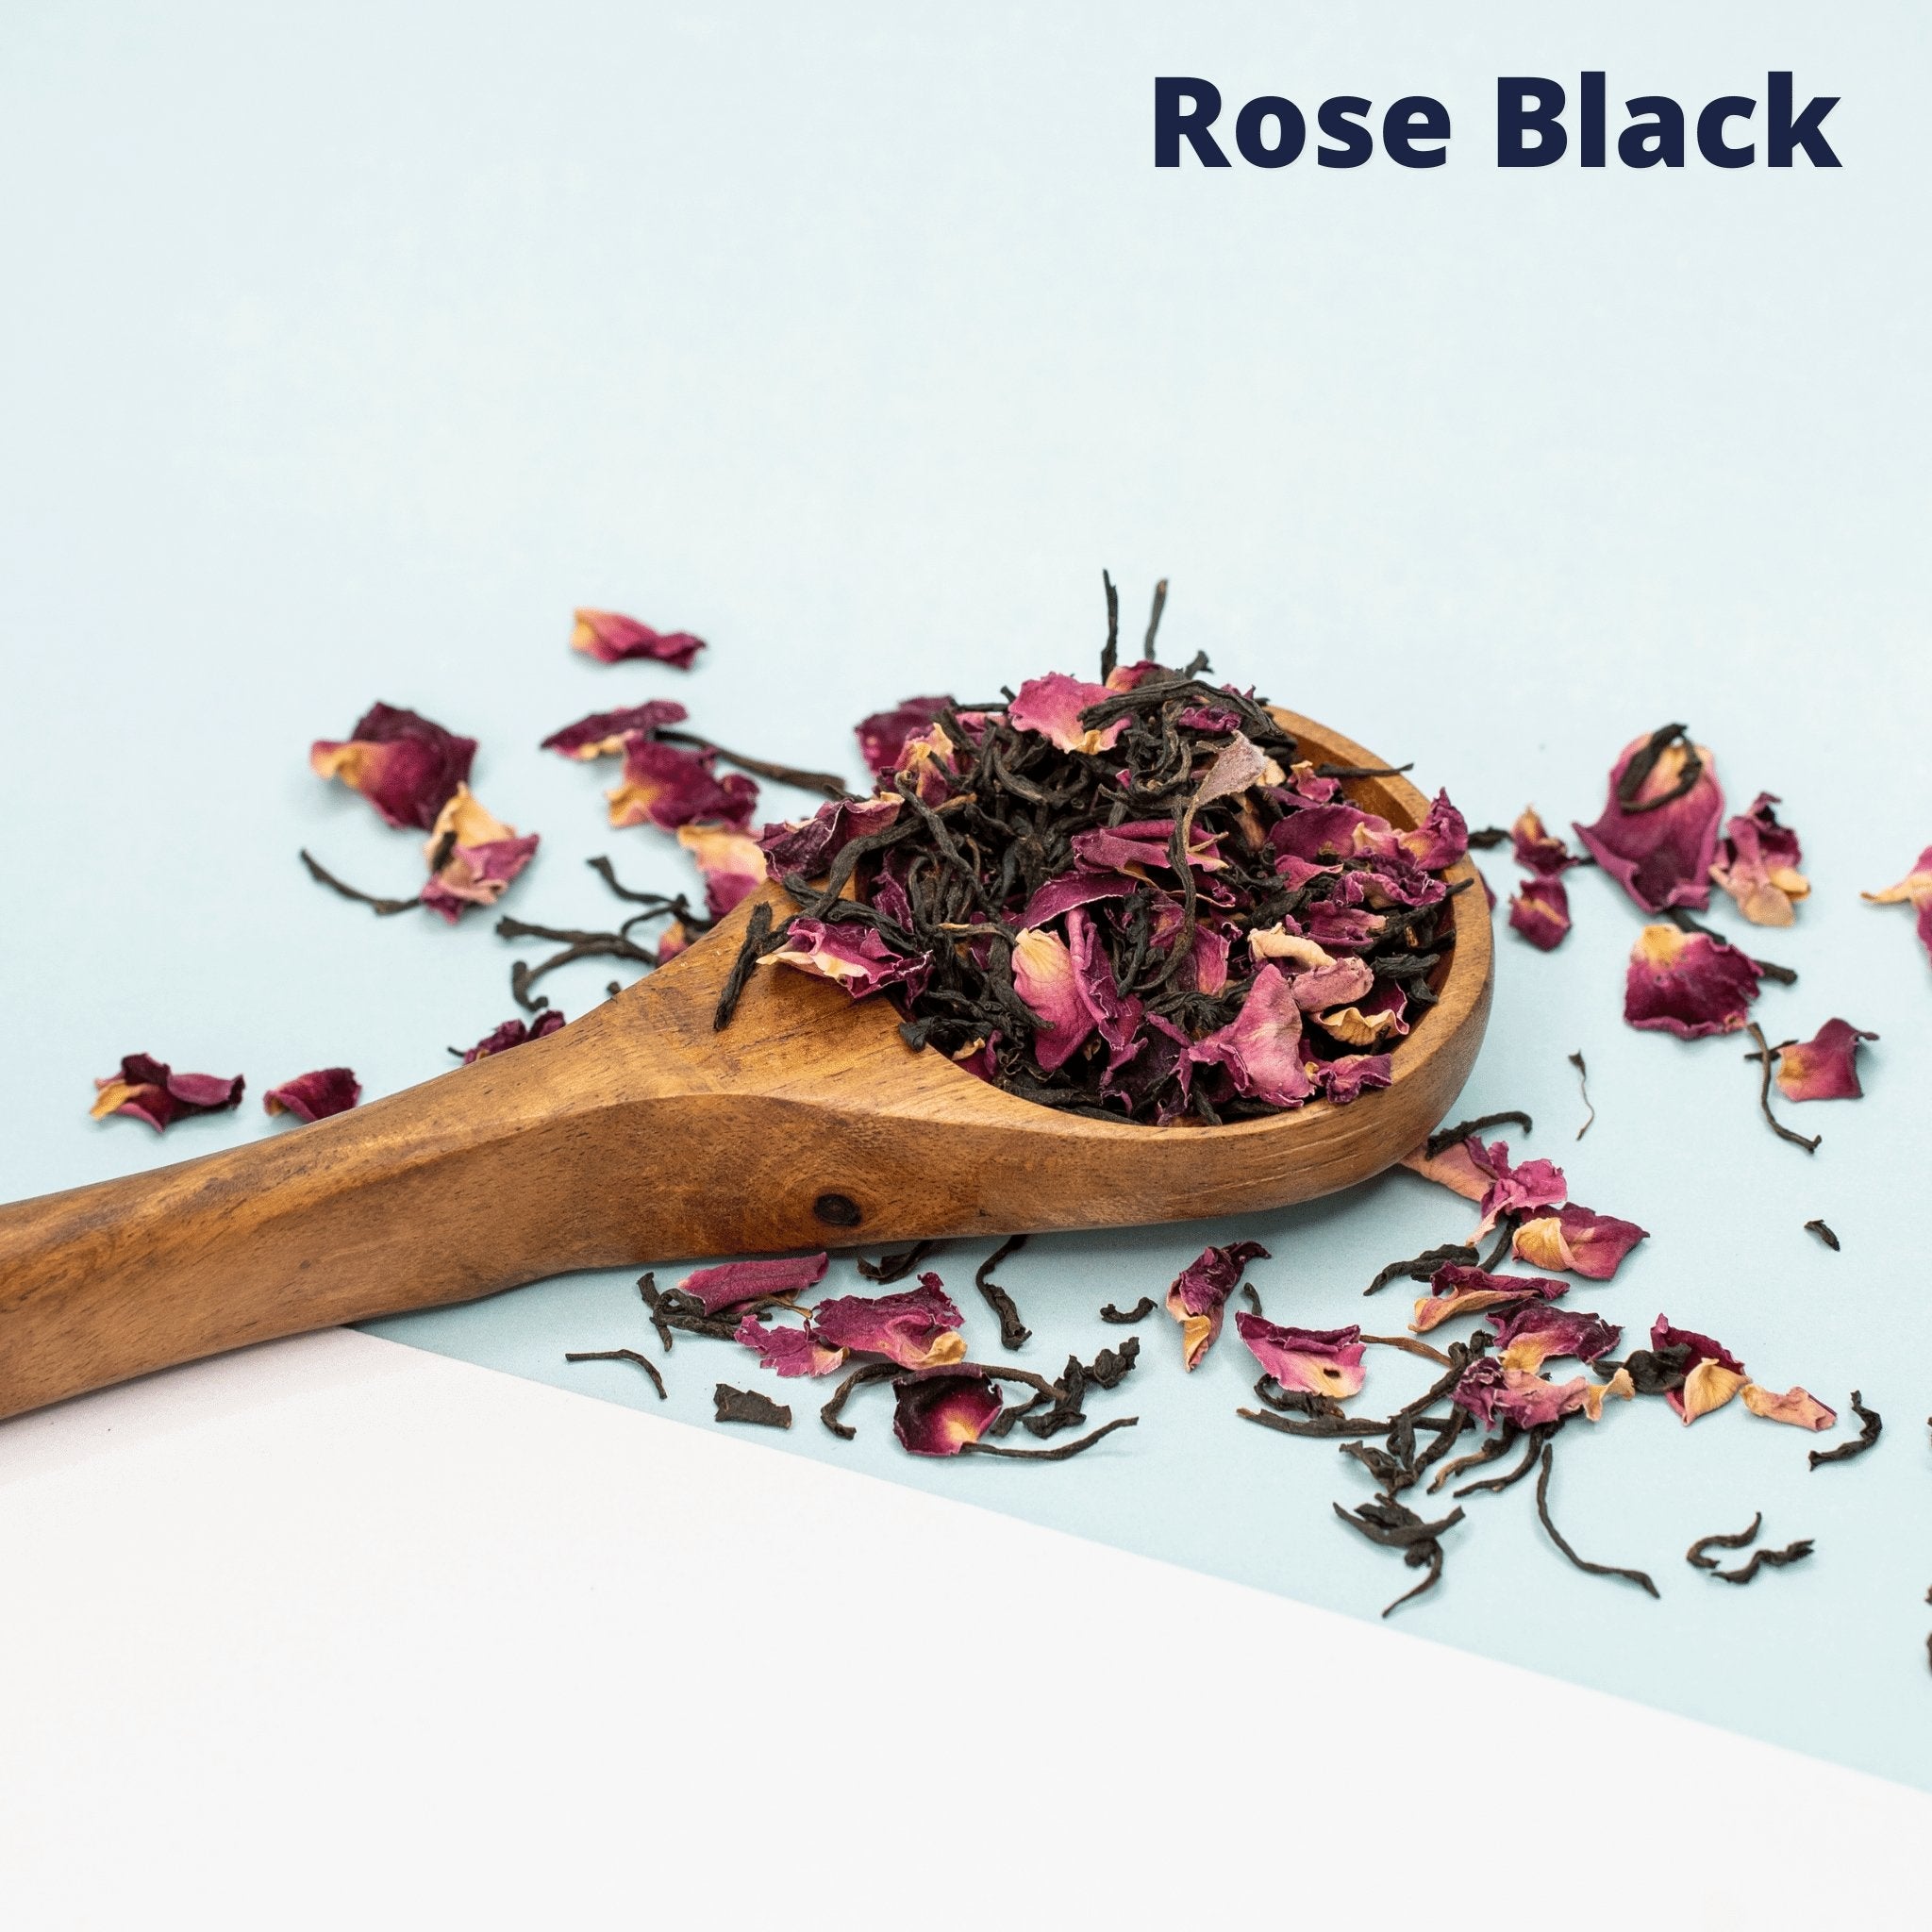 Ultimate Black Tea Bundle - Mosi Tea